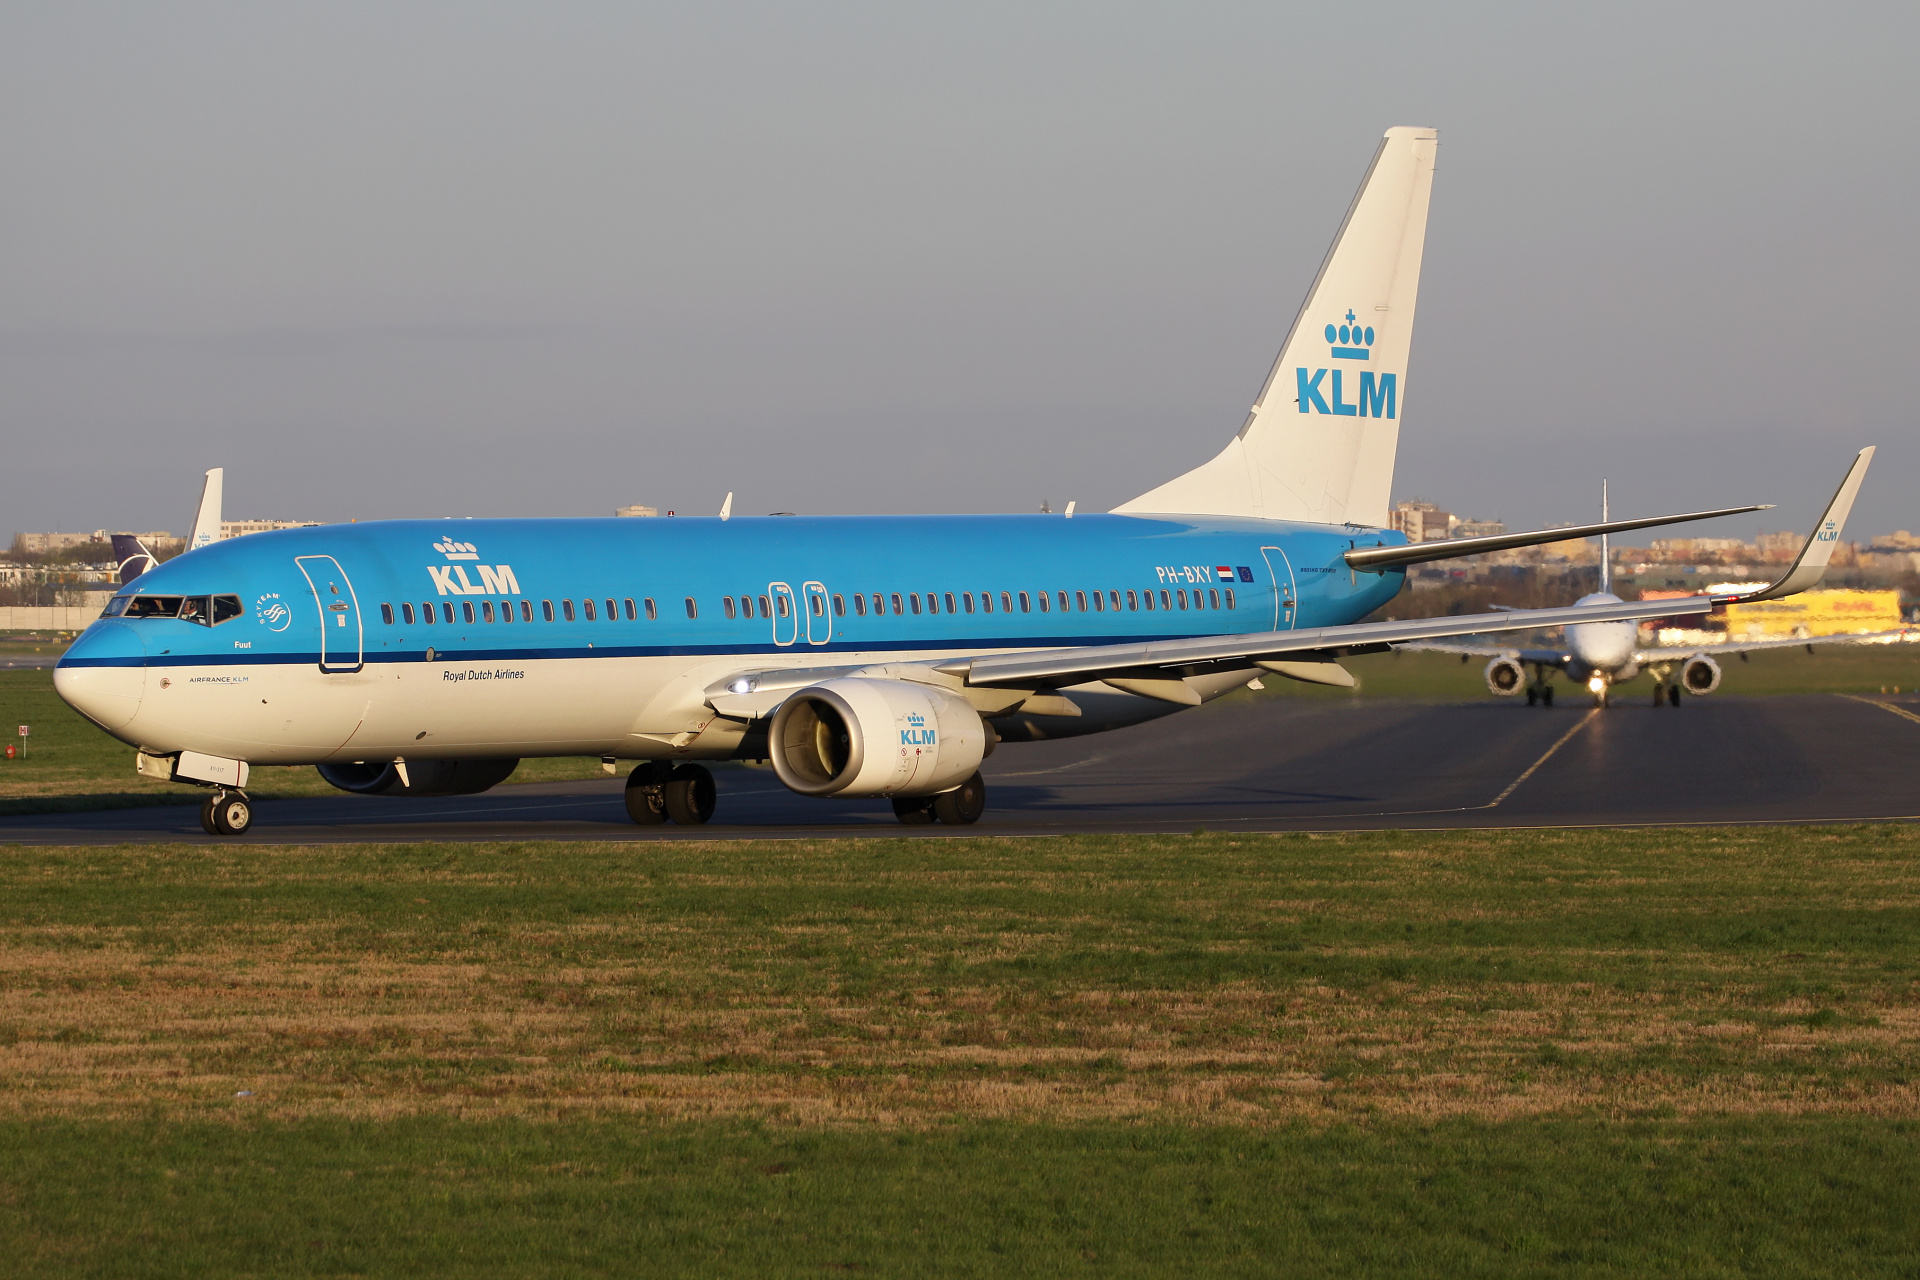 PH-BXY (Aircraft » EPWA Spotting » Boeing 737-800 » KLM Royal Dutch Airlines)